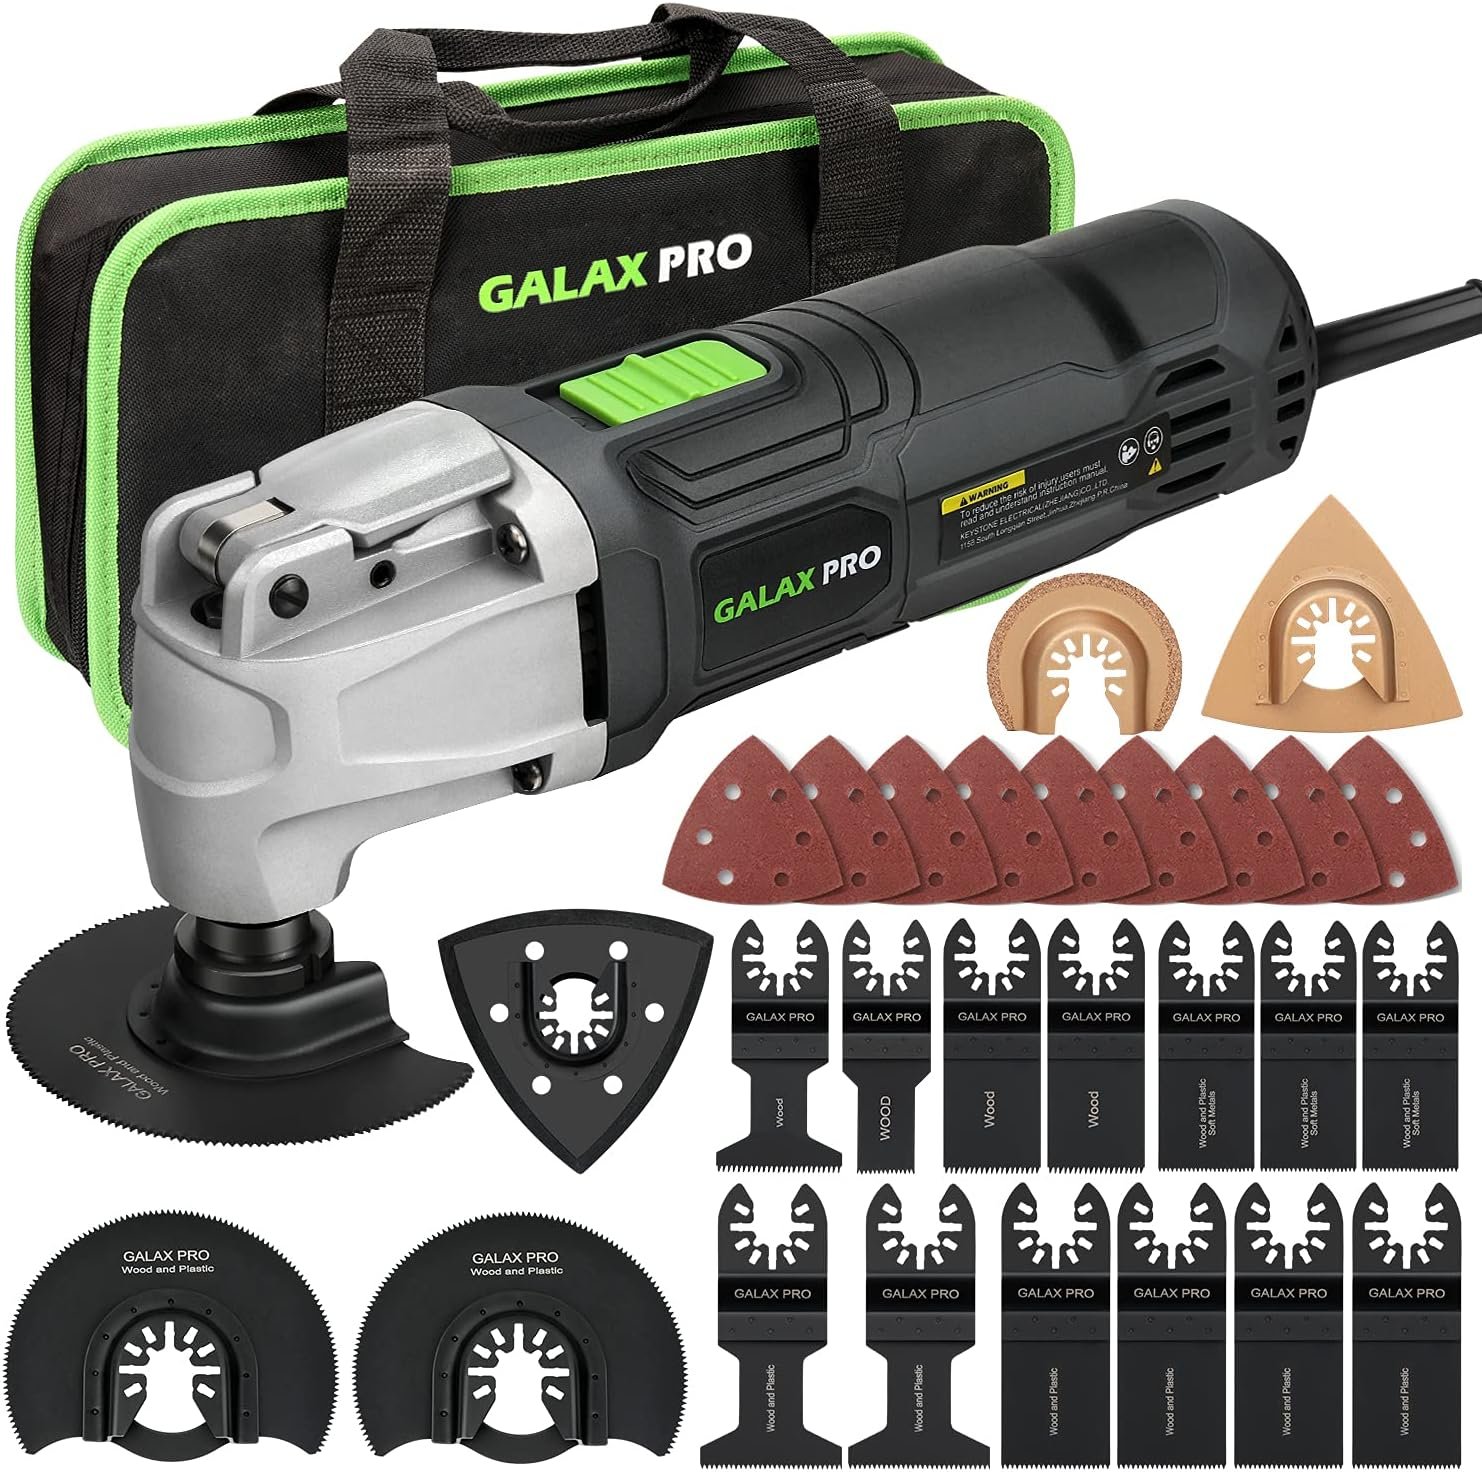 GALAX PRO Multi-Tool Kit Review